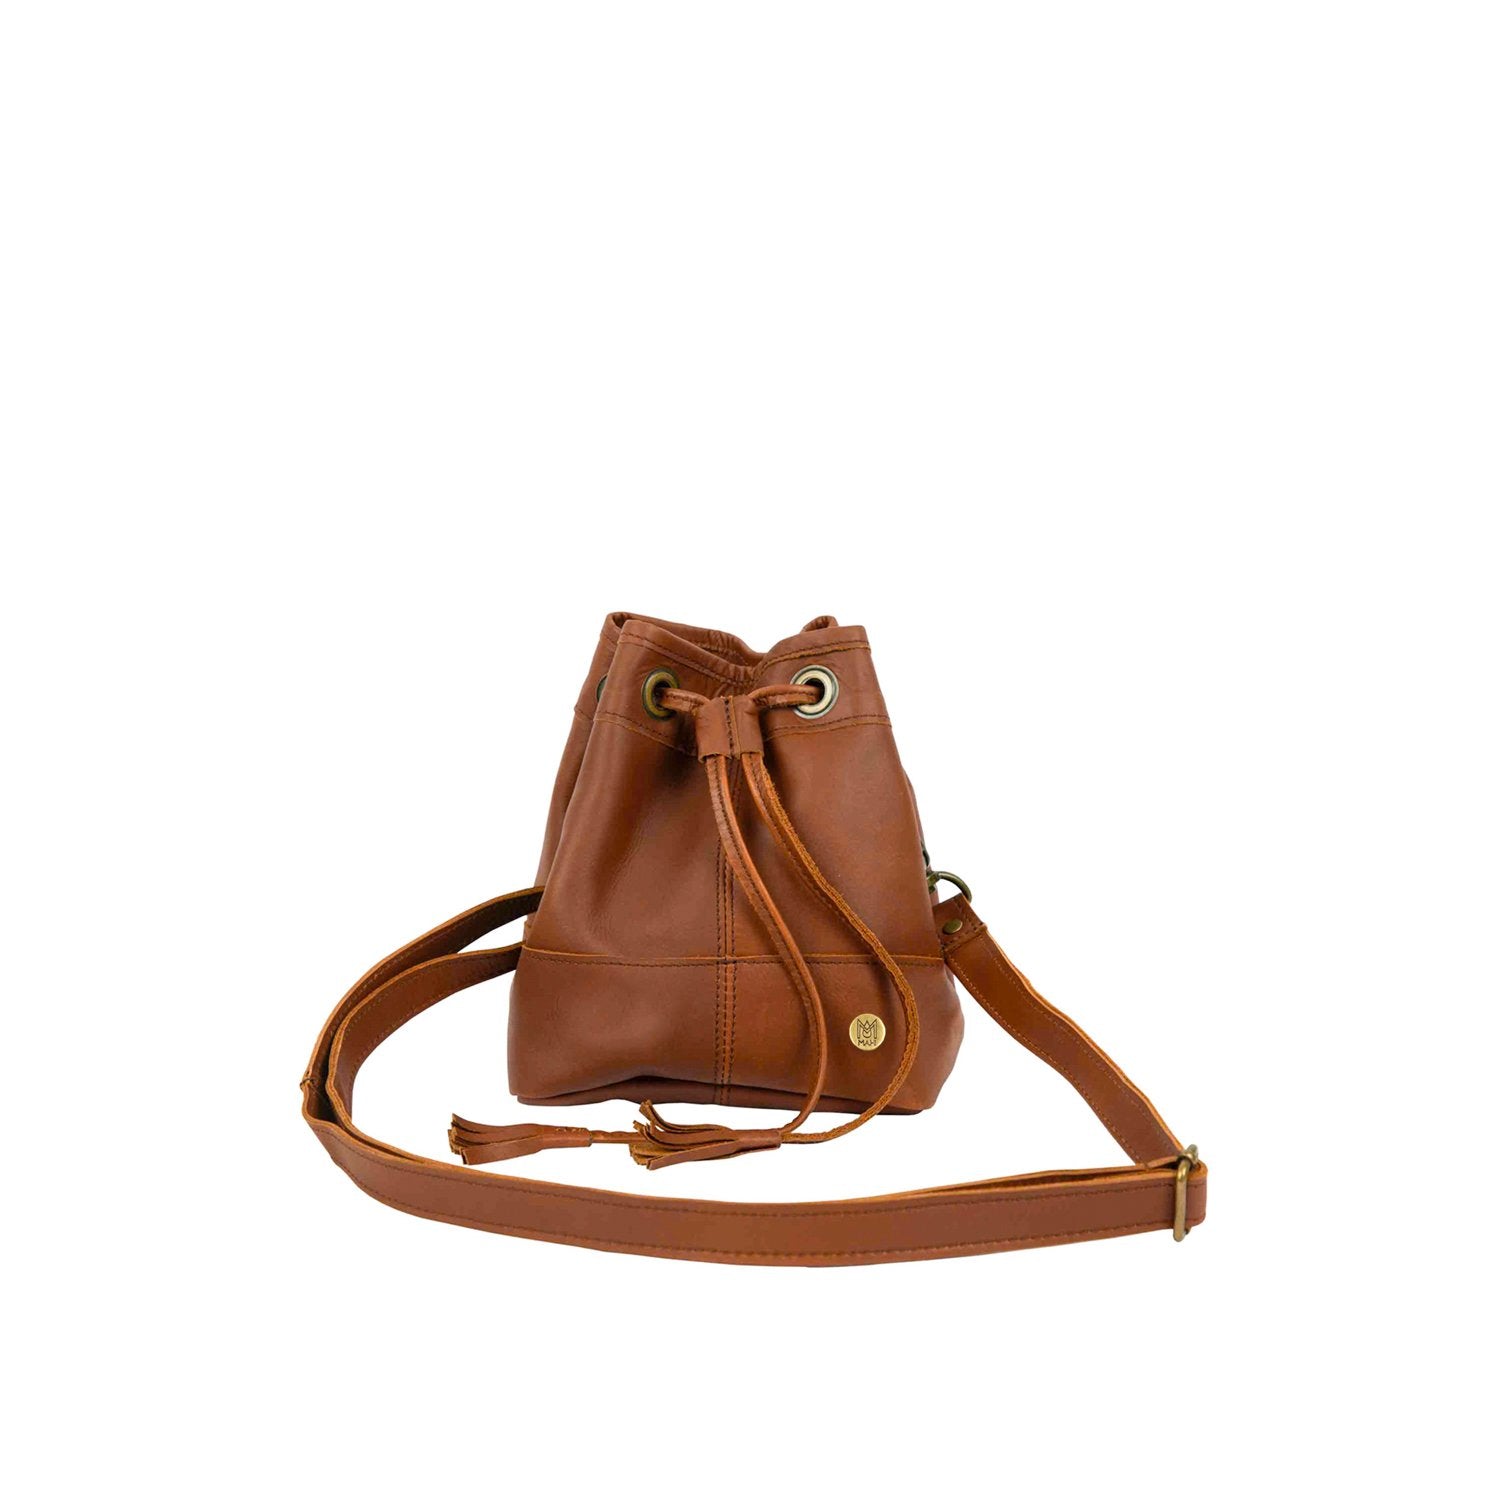 Modapelle | Leather Handbags & Wallets Wholesaler & Importer